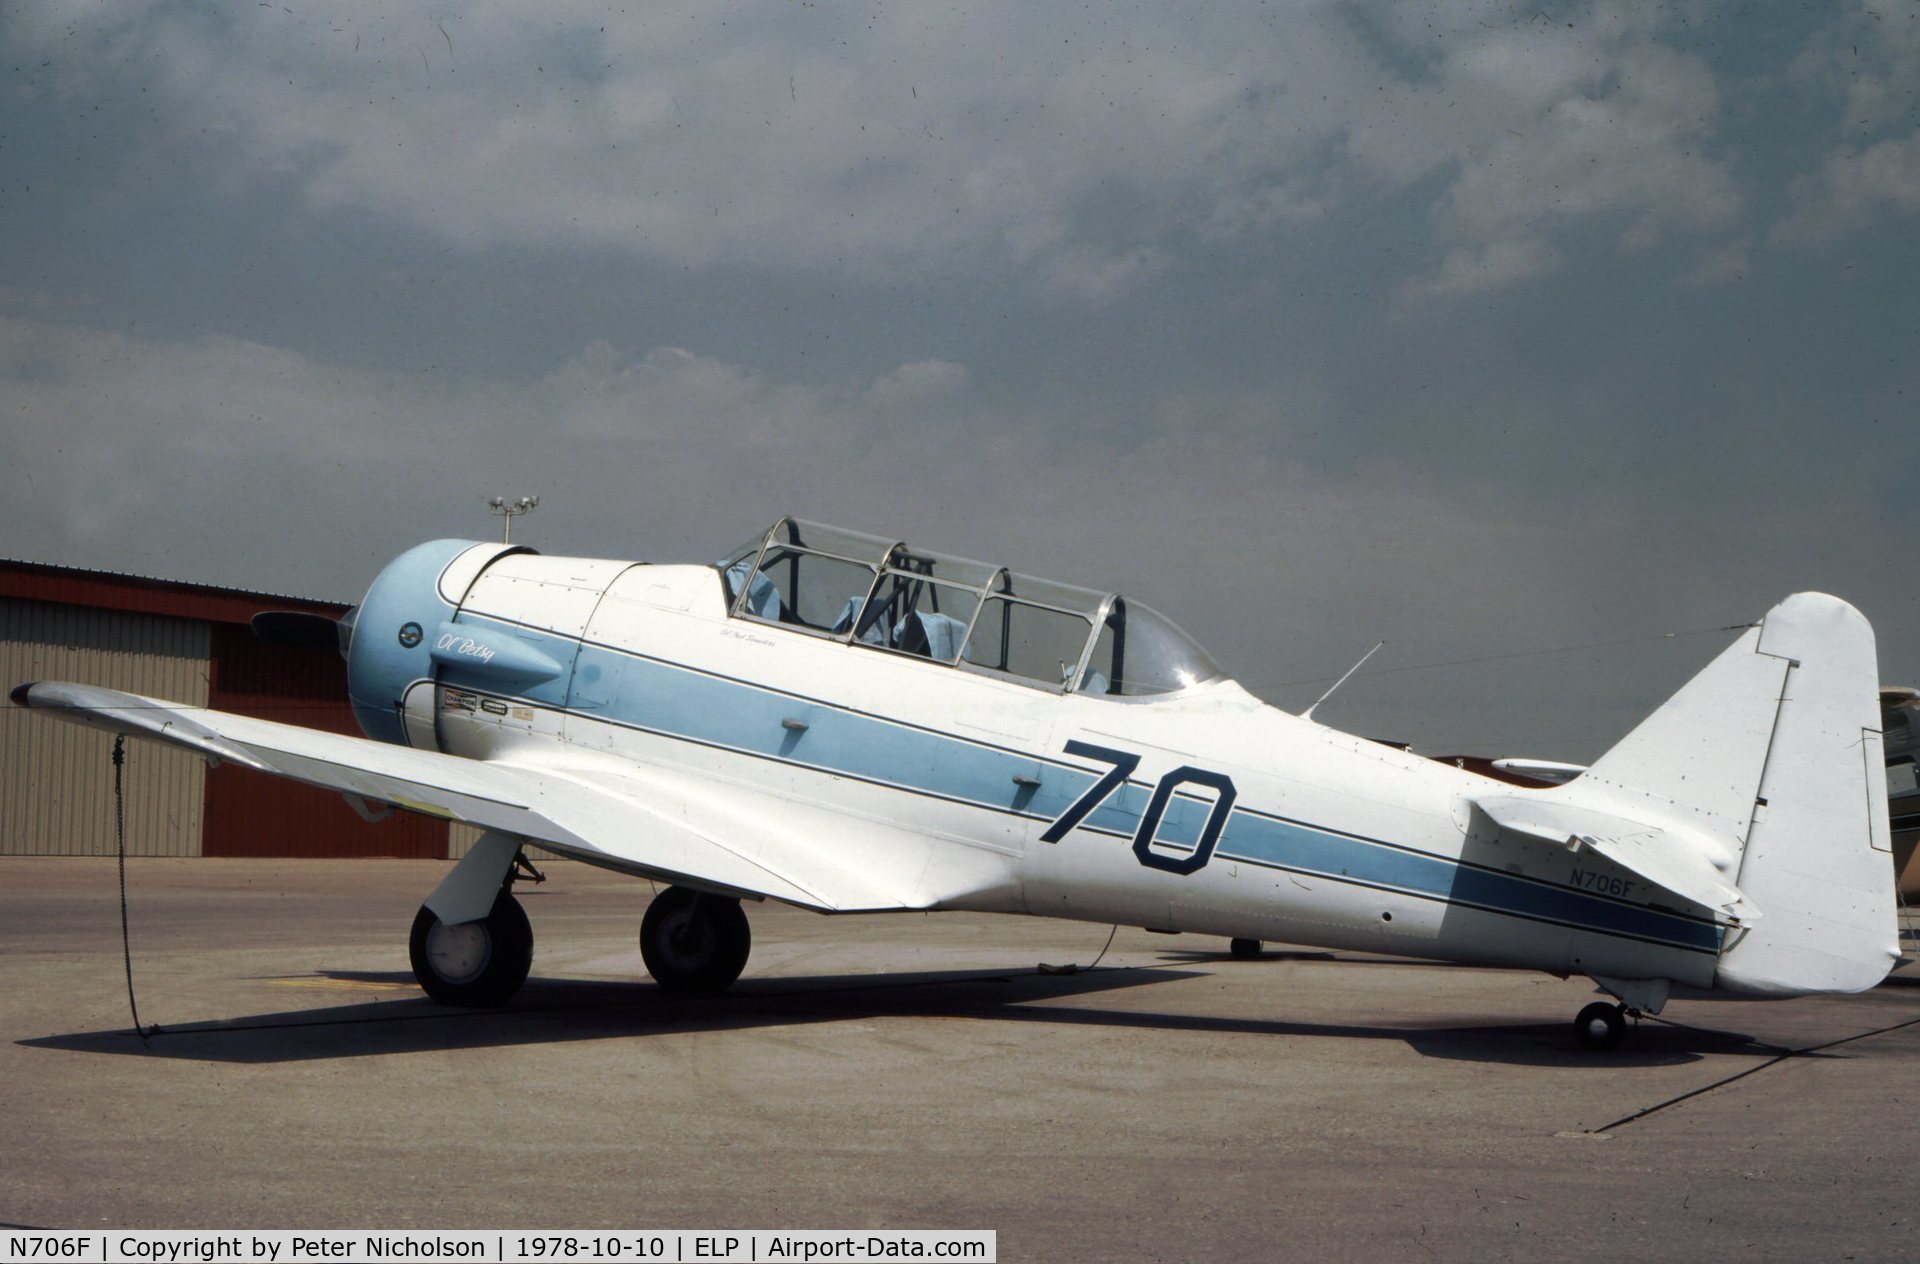 N706F, North American AT-6F C/N 121-42615, AT-6F Texan seen at El Paso in October 1978.